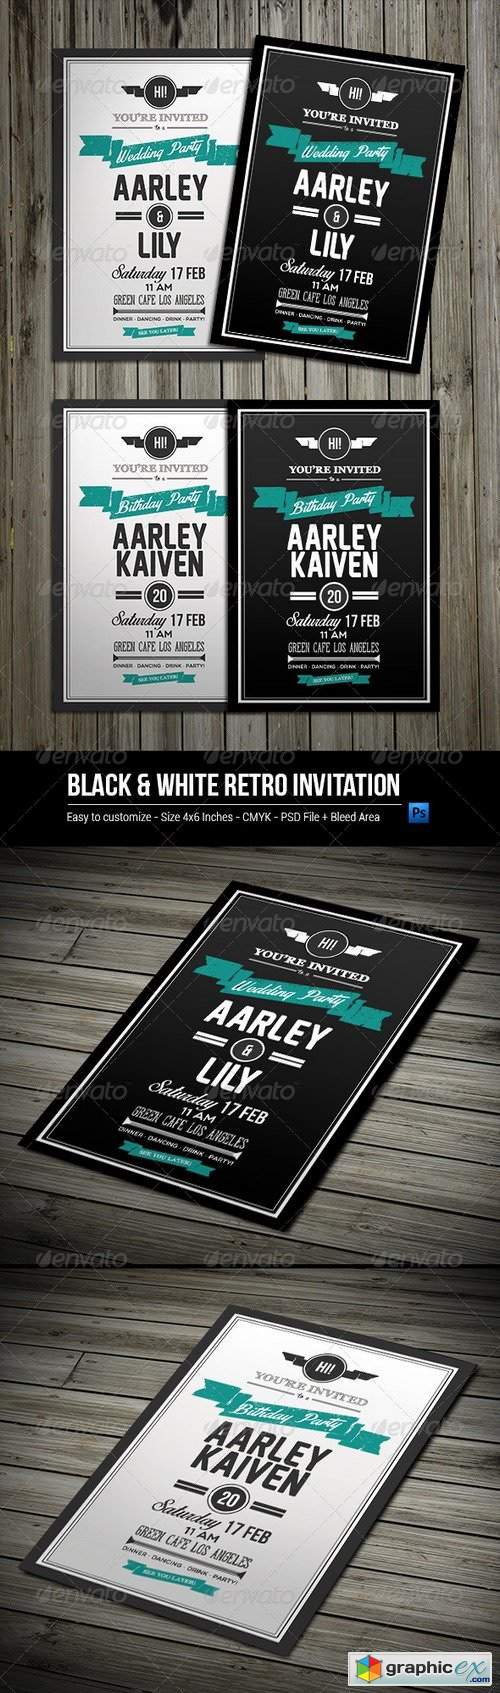 Black & White Retro Invitation